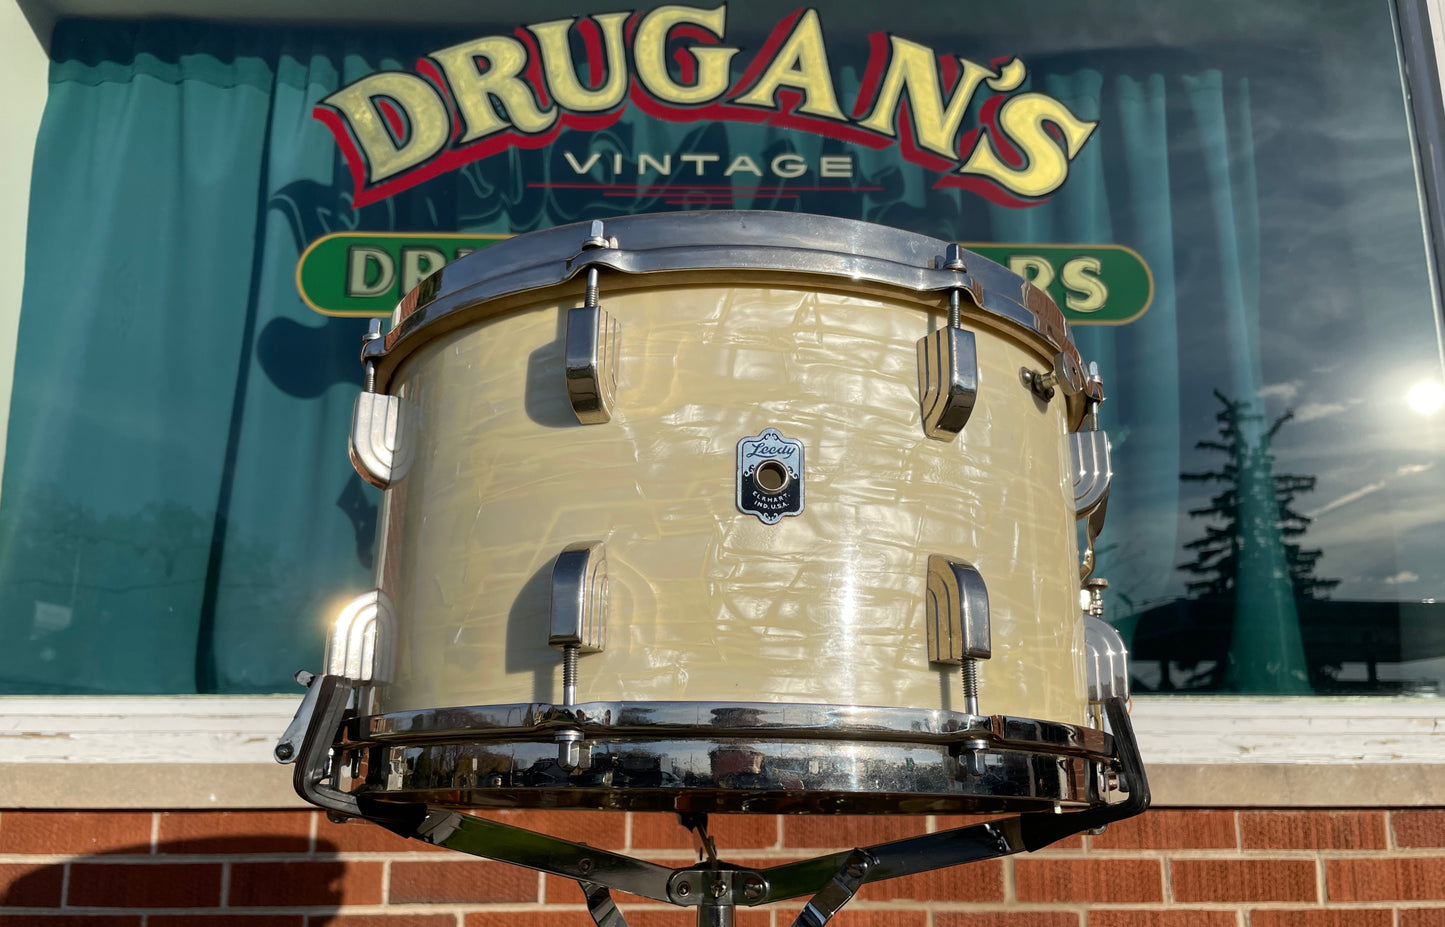 1946 Leedy 8x14 Broadway Snare Drum White Marine Pearl